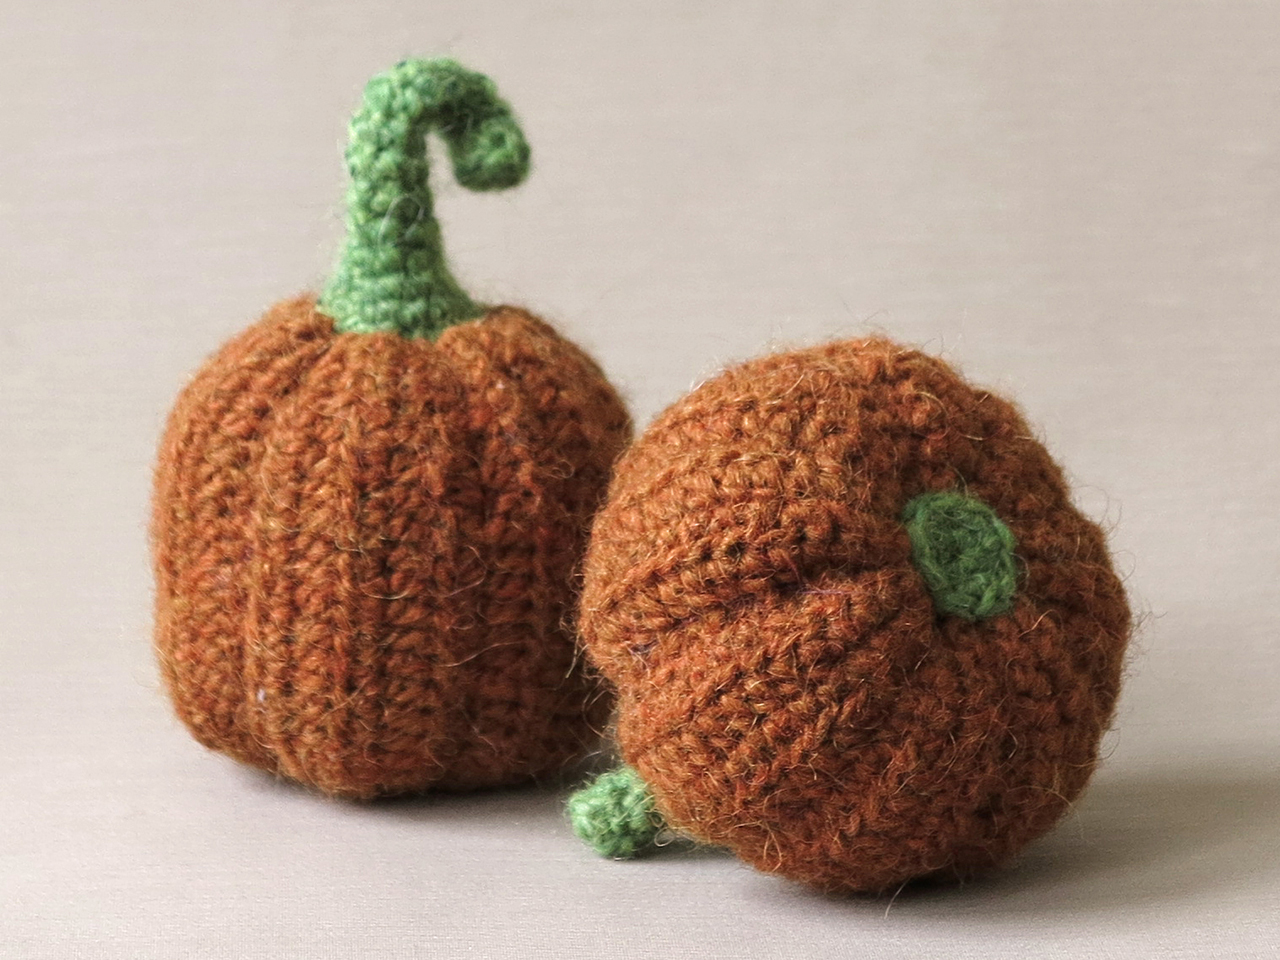 Easy Crochet Pumpkin Pattern for beginners- free crochet pattern - A Crafty  Concept